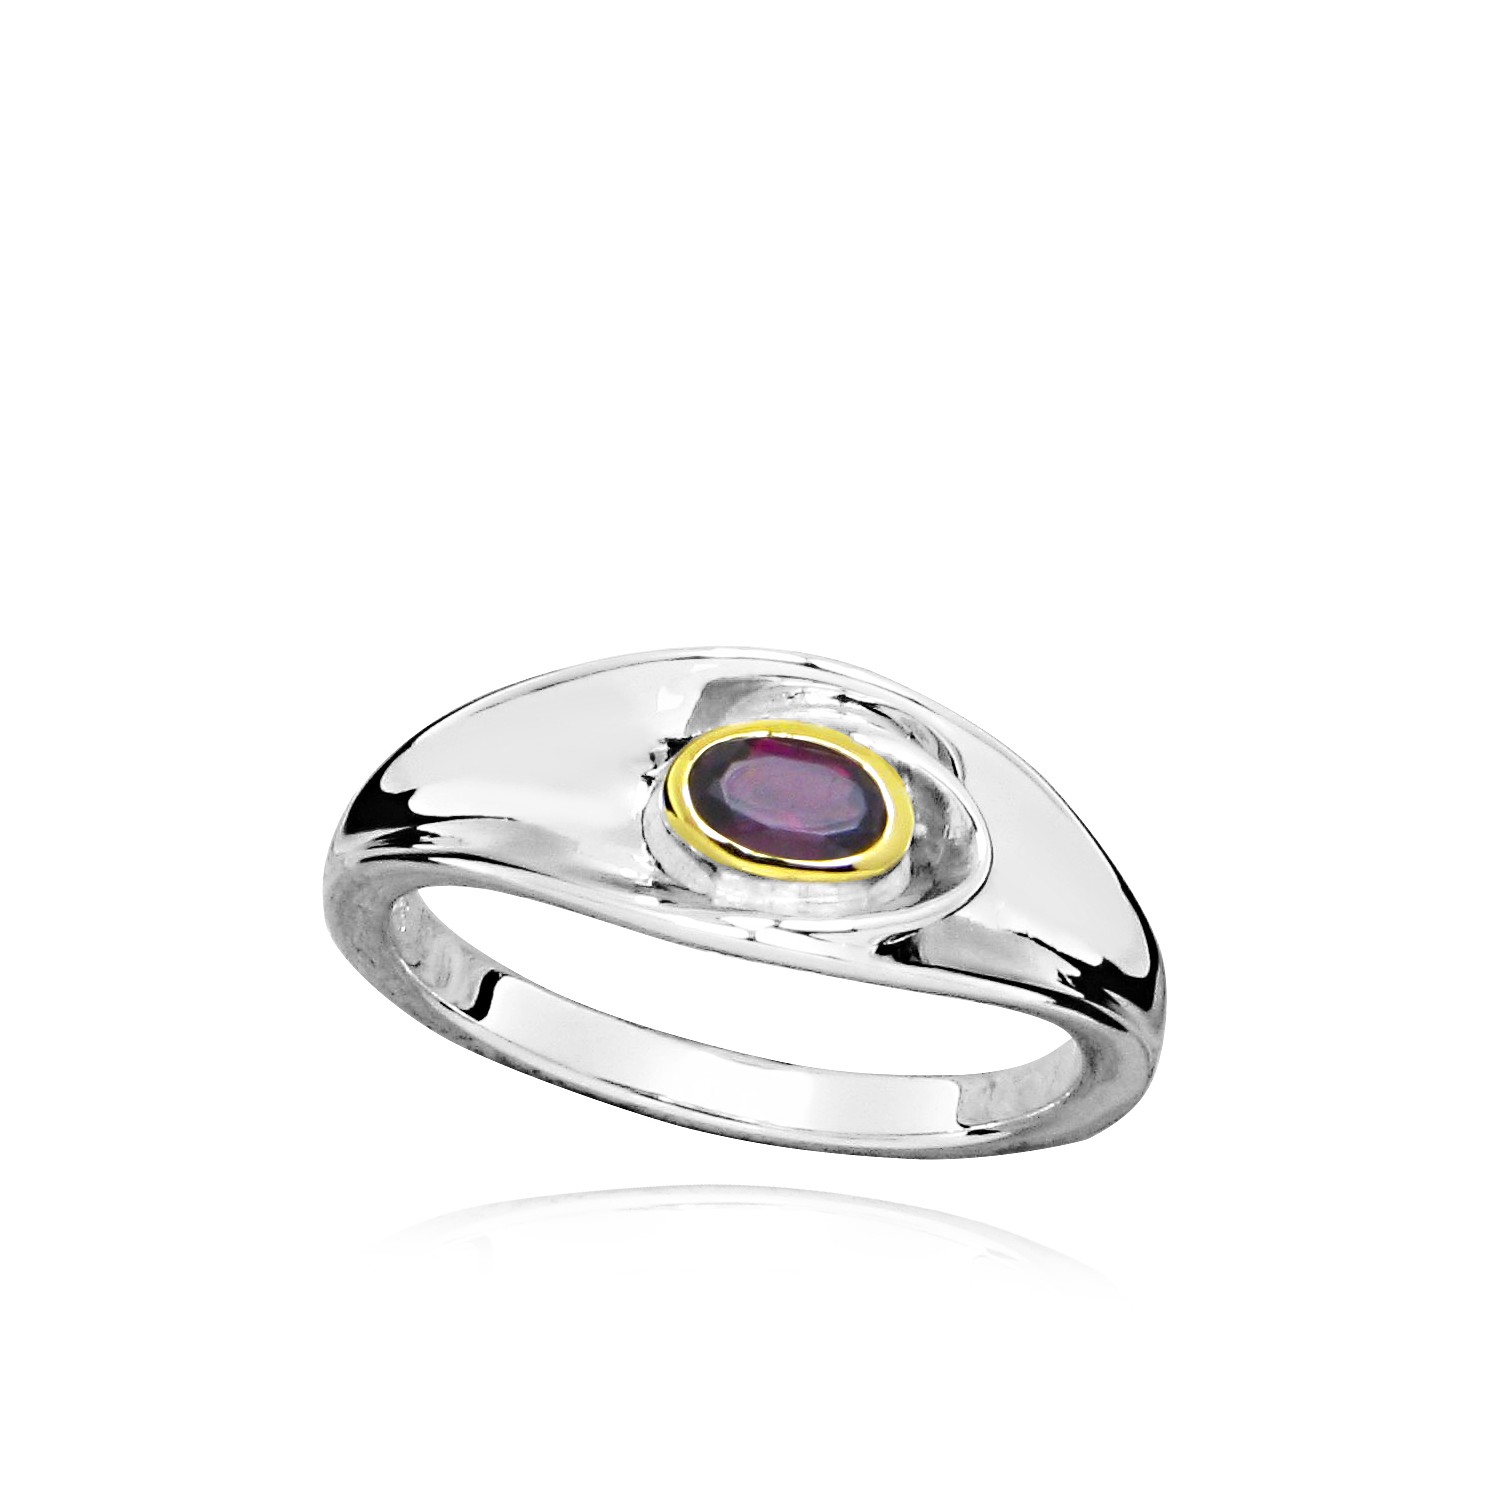 MOISS Moiss stříbrný prsten MARLEN BICOLOR GOLD s GRANÁTEM RG000140 Velikost 59 mm RG000143